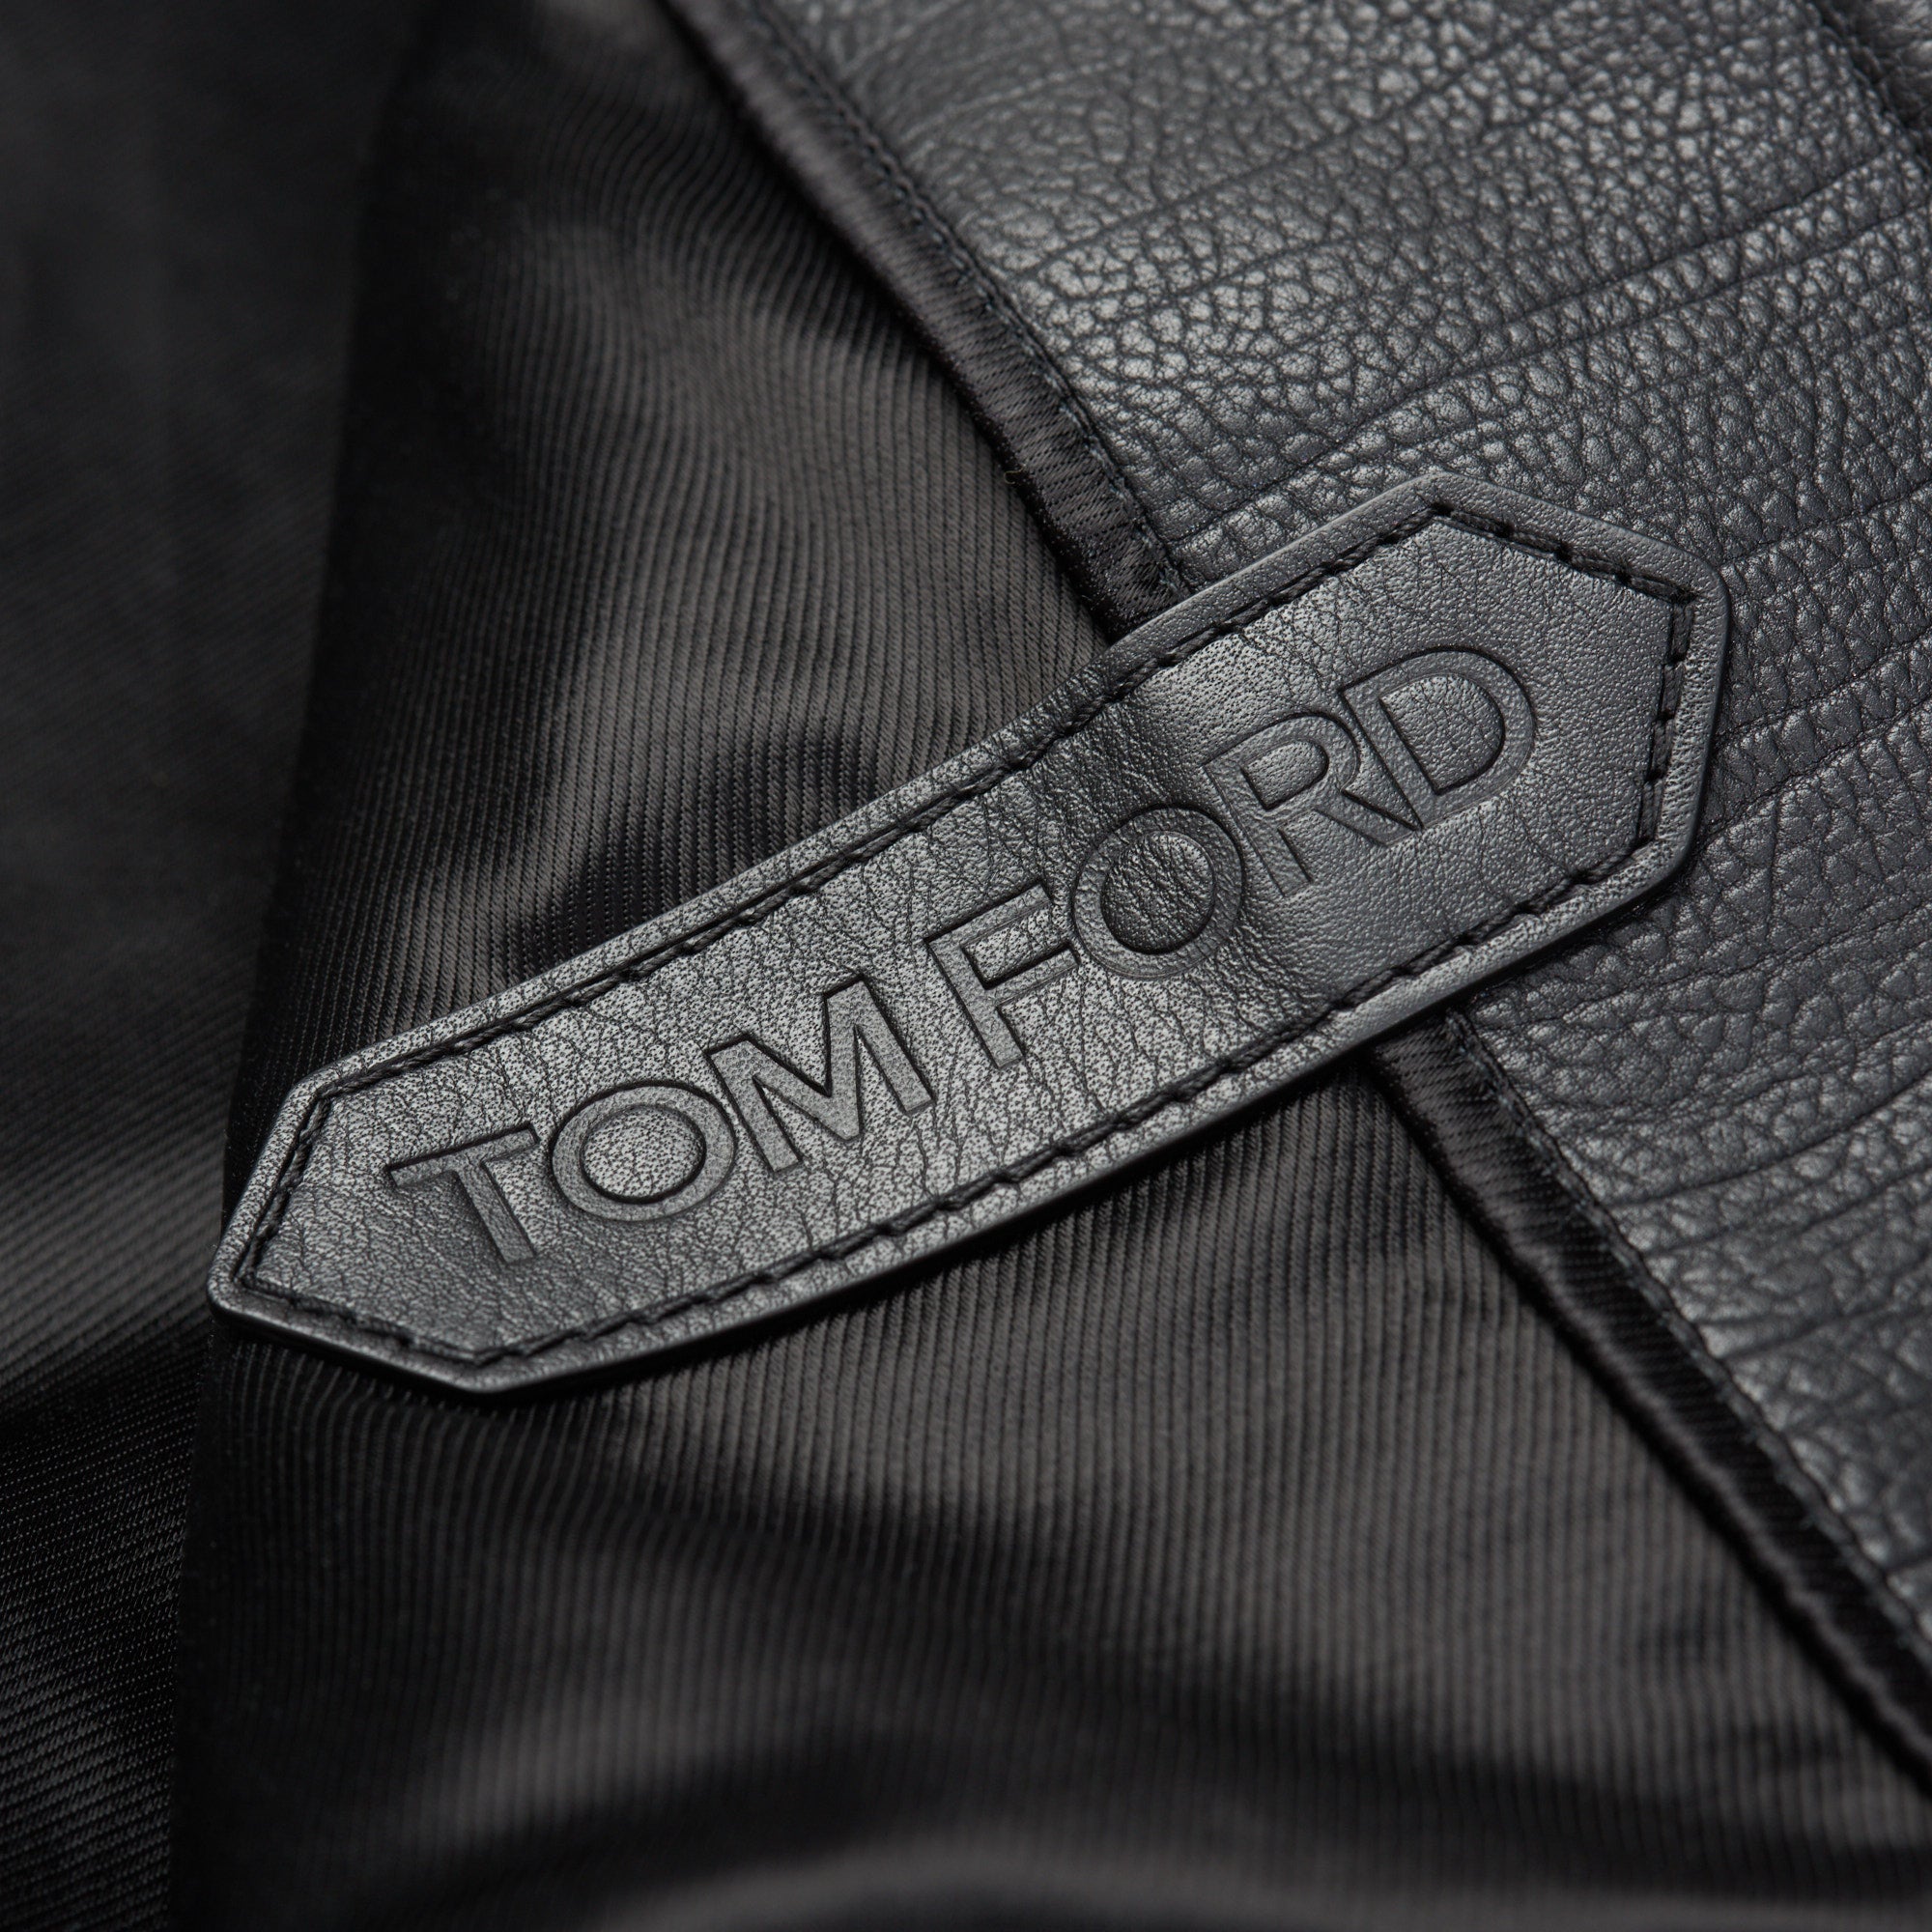 TOM FORD Black Grain Calf Leather Western Jacket NEW TOM FORD